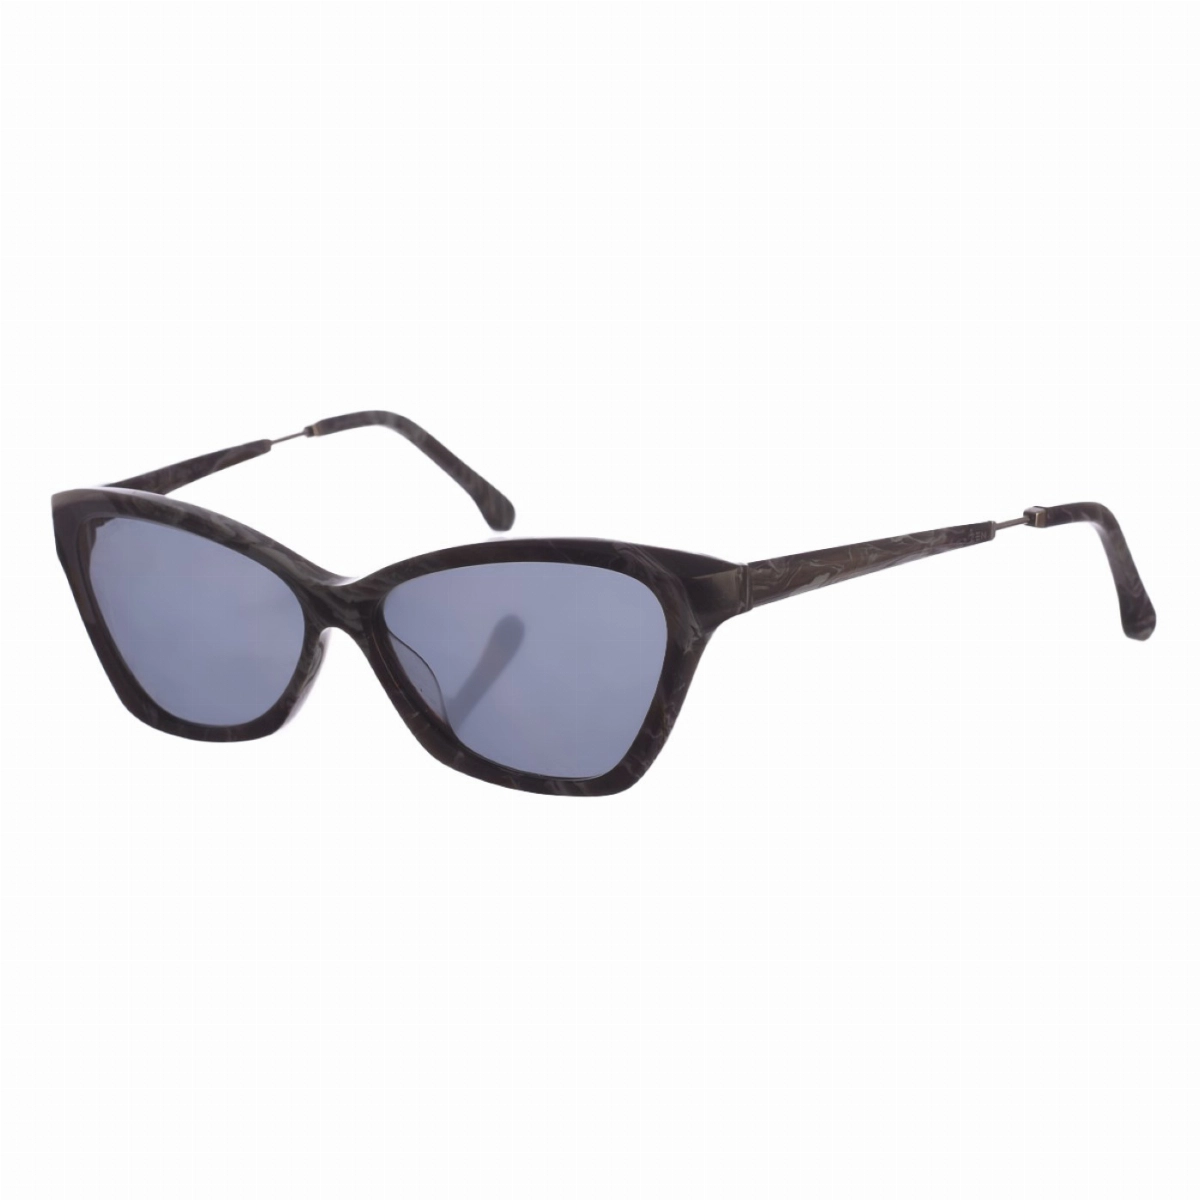 Gafas de sol de acetato con forma cat-eye Z437 mujer Z437-C05 Zen